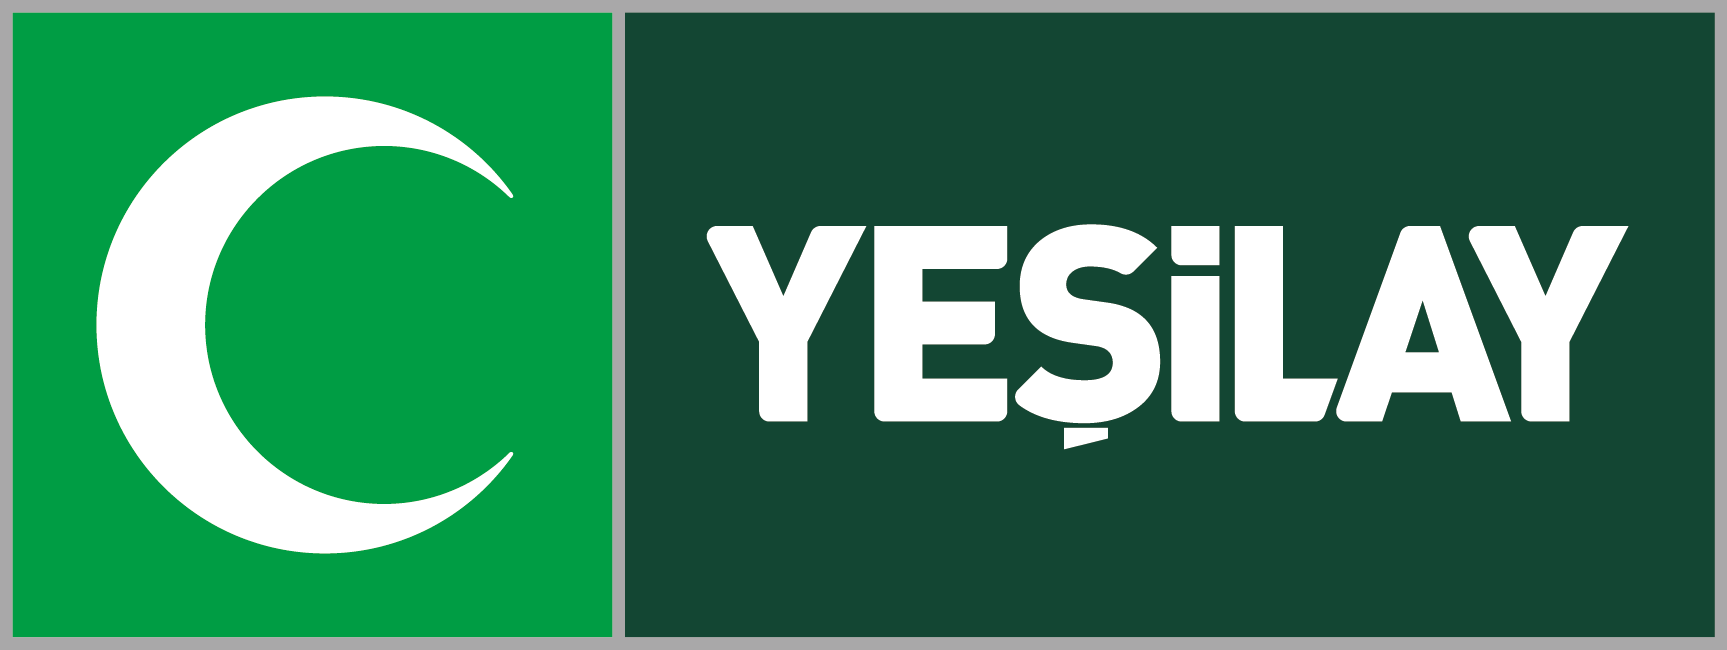 Yeşilay Logo [yesilay.org.tr] png